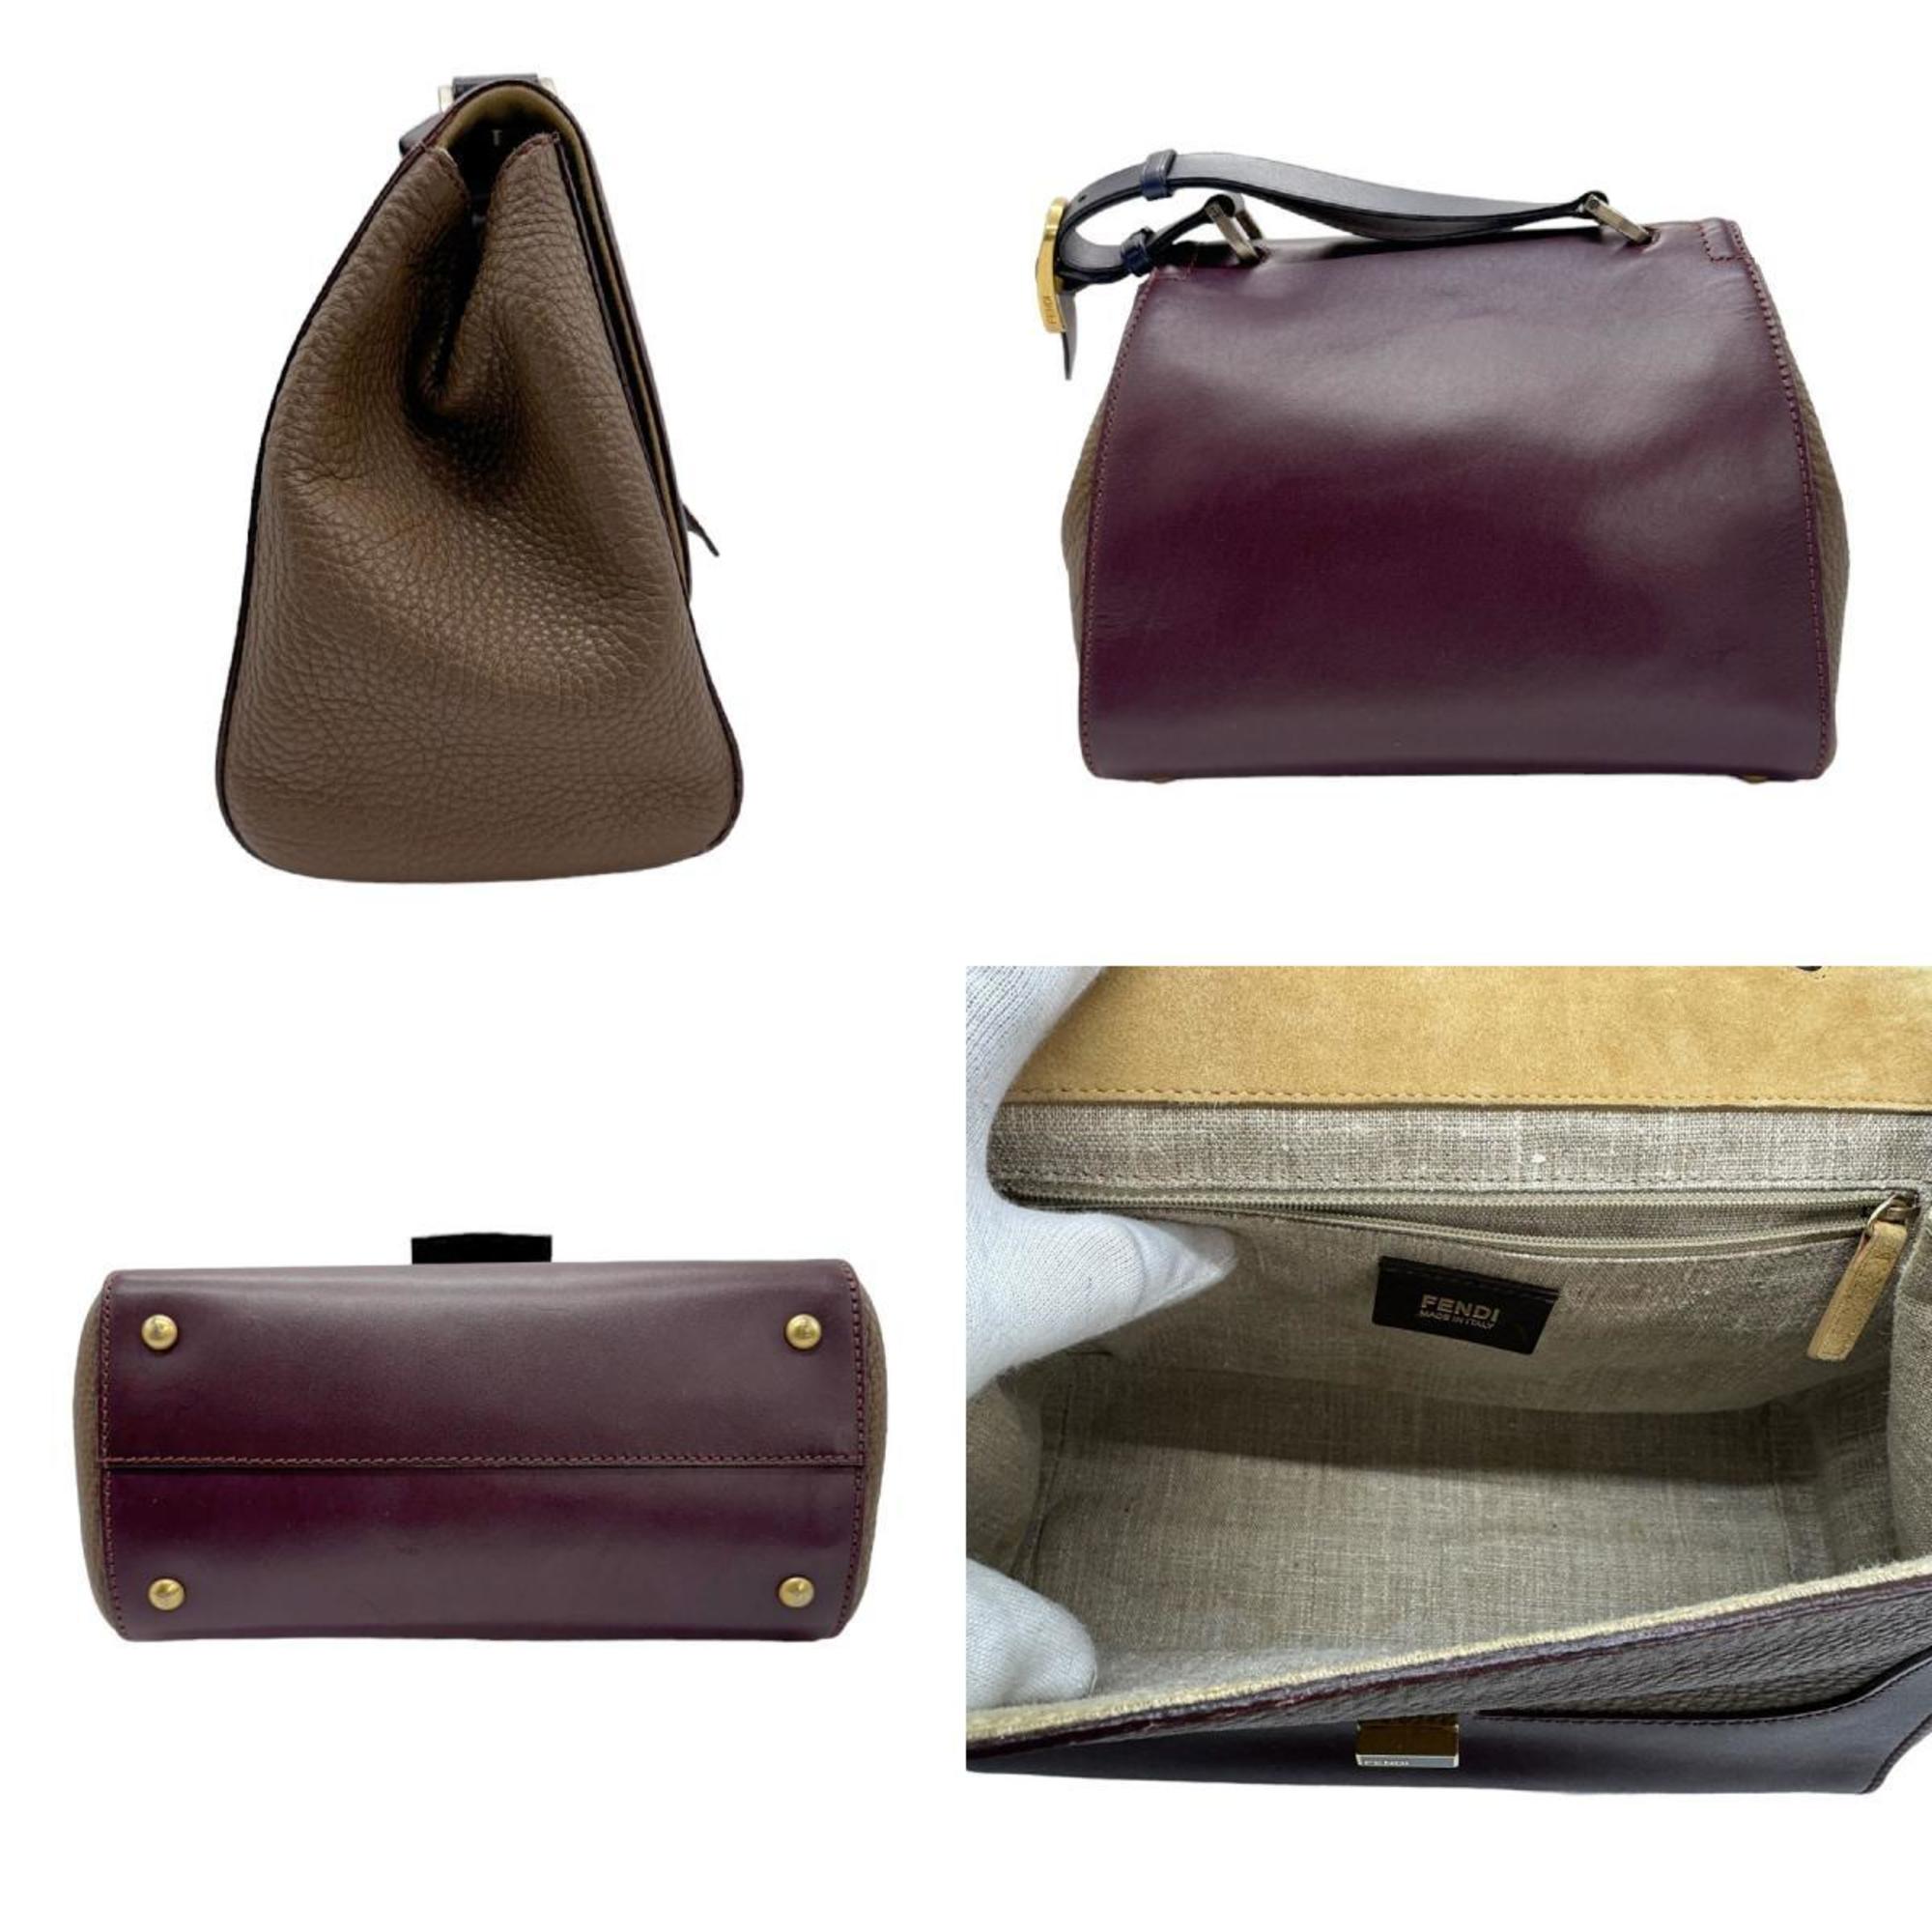 FENDI Shoulder Bag Handbag Leather Bordeaux x Brown Women's 8BN234-FKD z0944